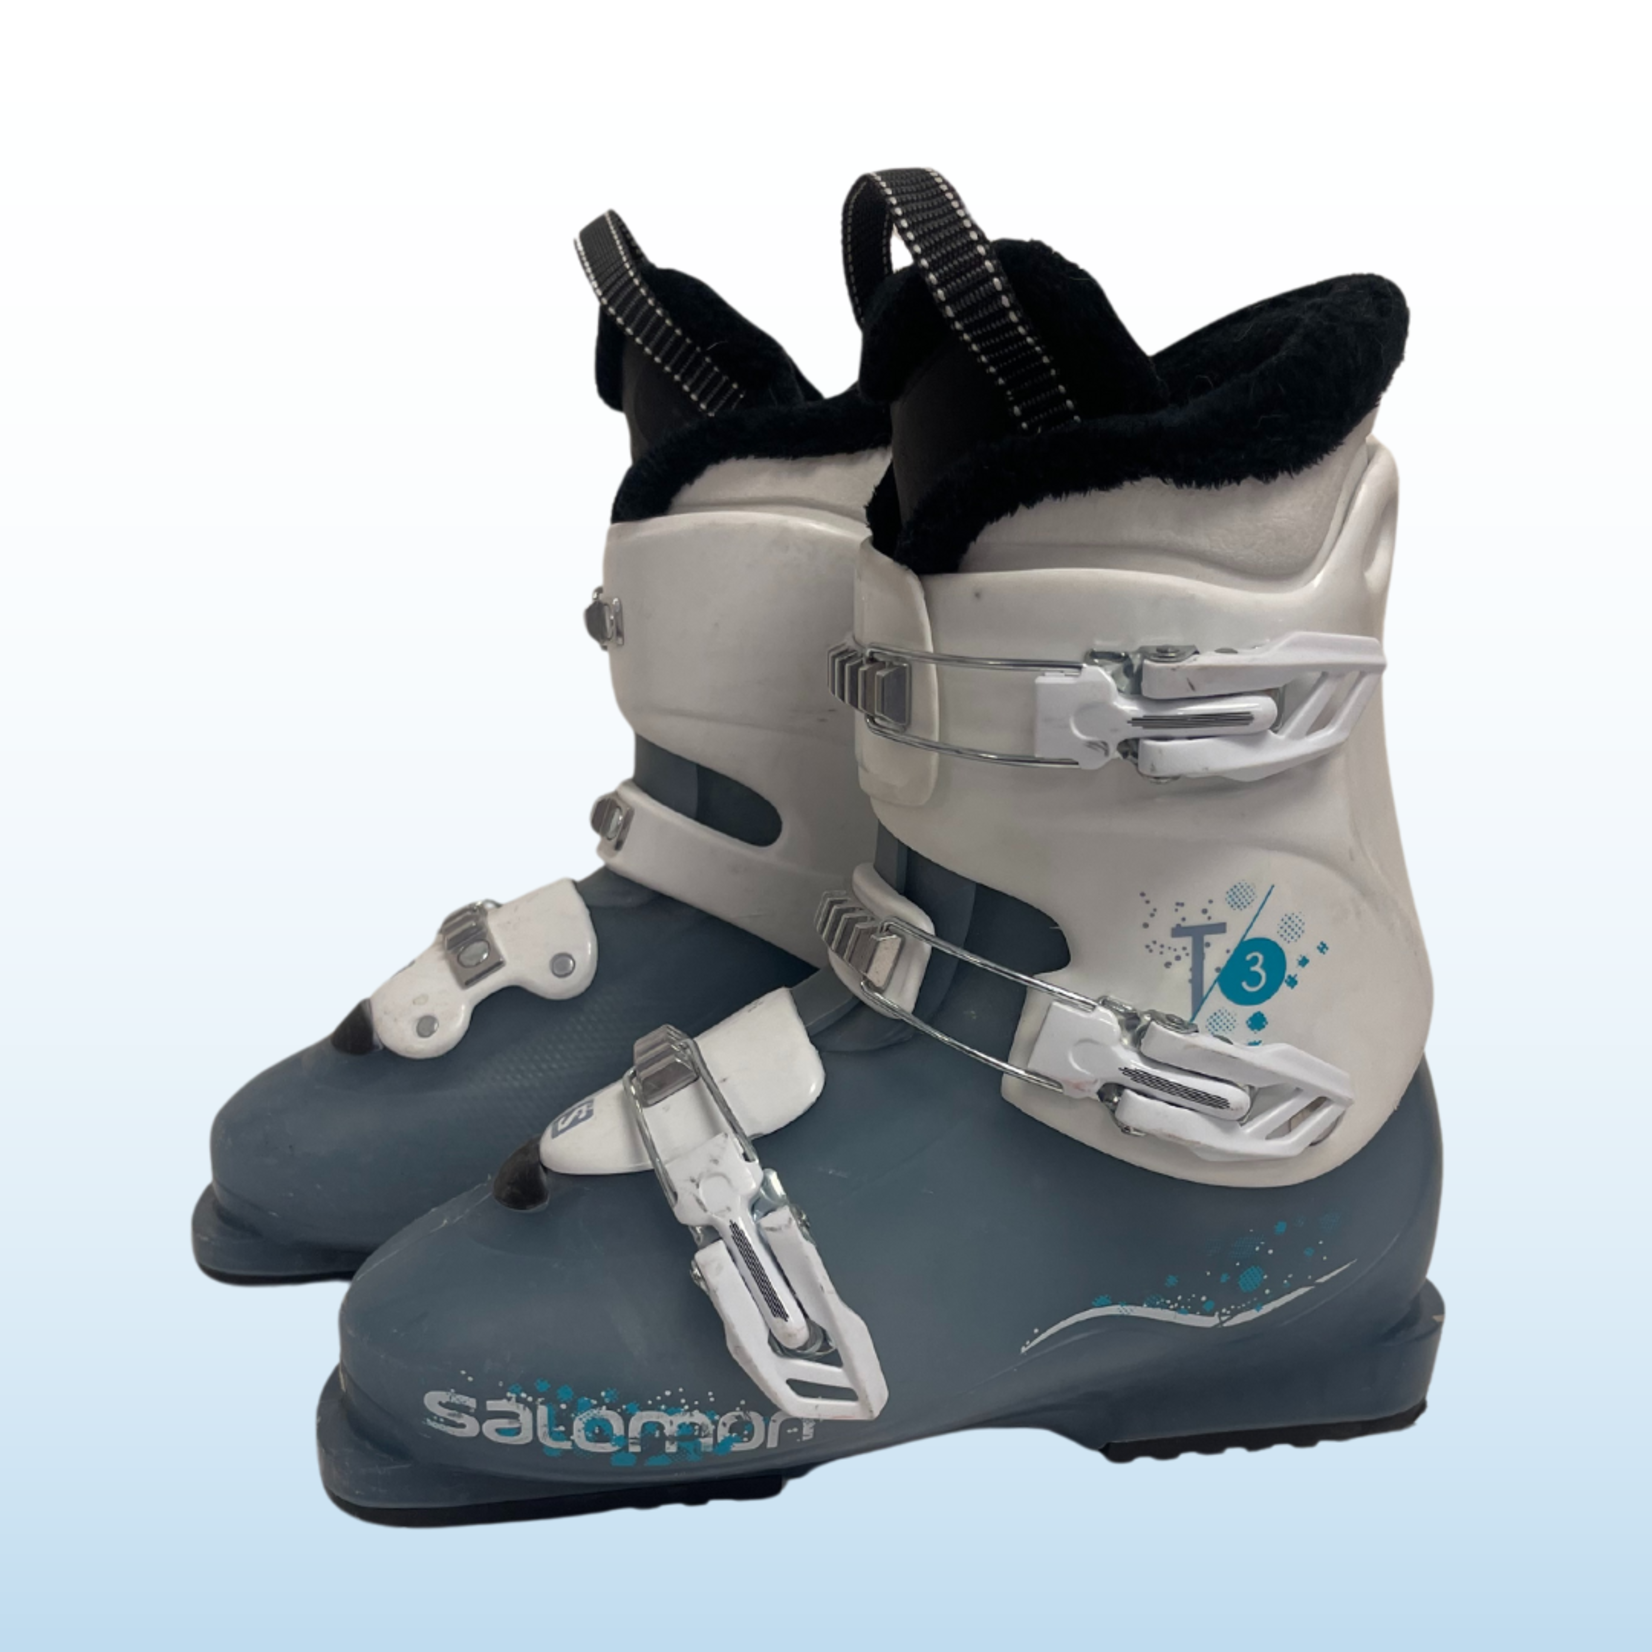 Salomon Salomon T3 Kids Ski Boots - Light Blue, Size 26.5